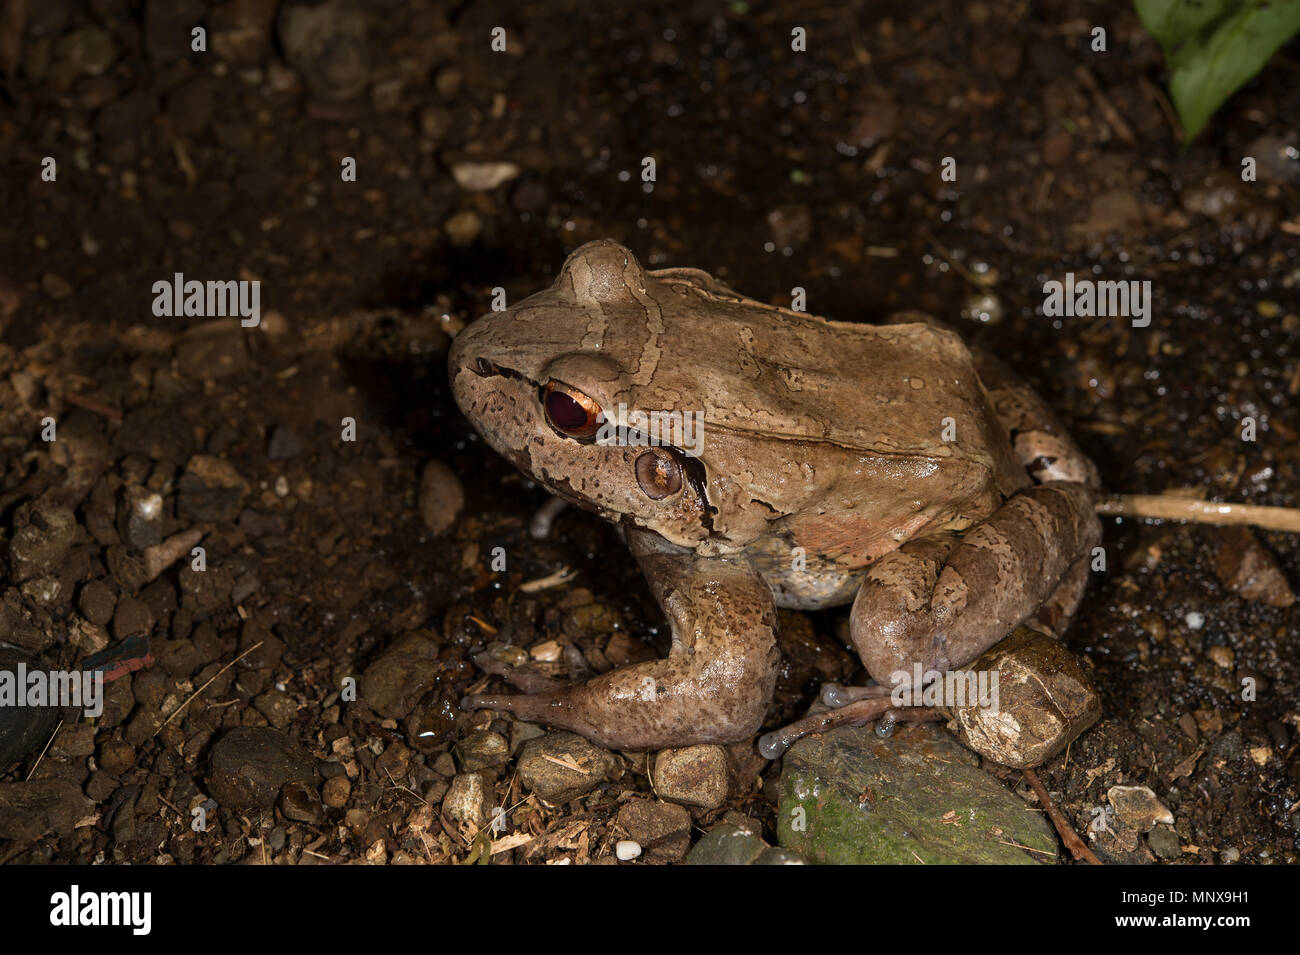 Atlantic Broad-headed Litter Frog, Craugastor megacephalus, Craugastoridae, Costa Rica Stock Photo